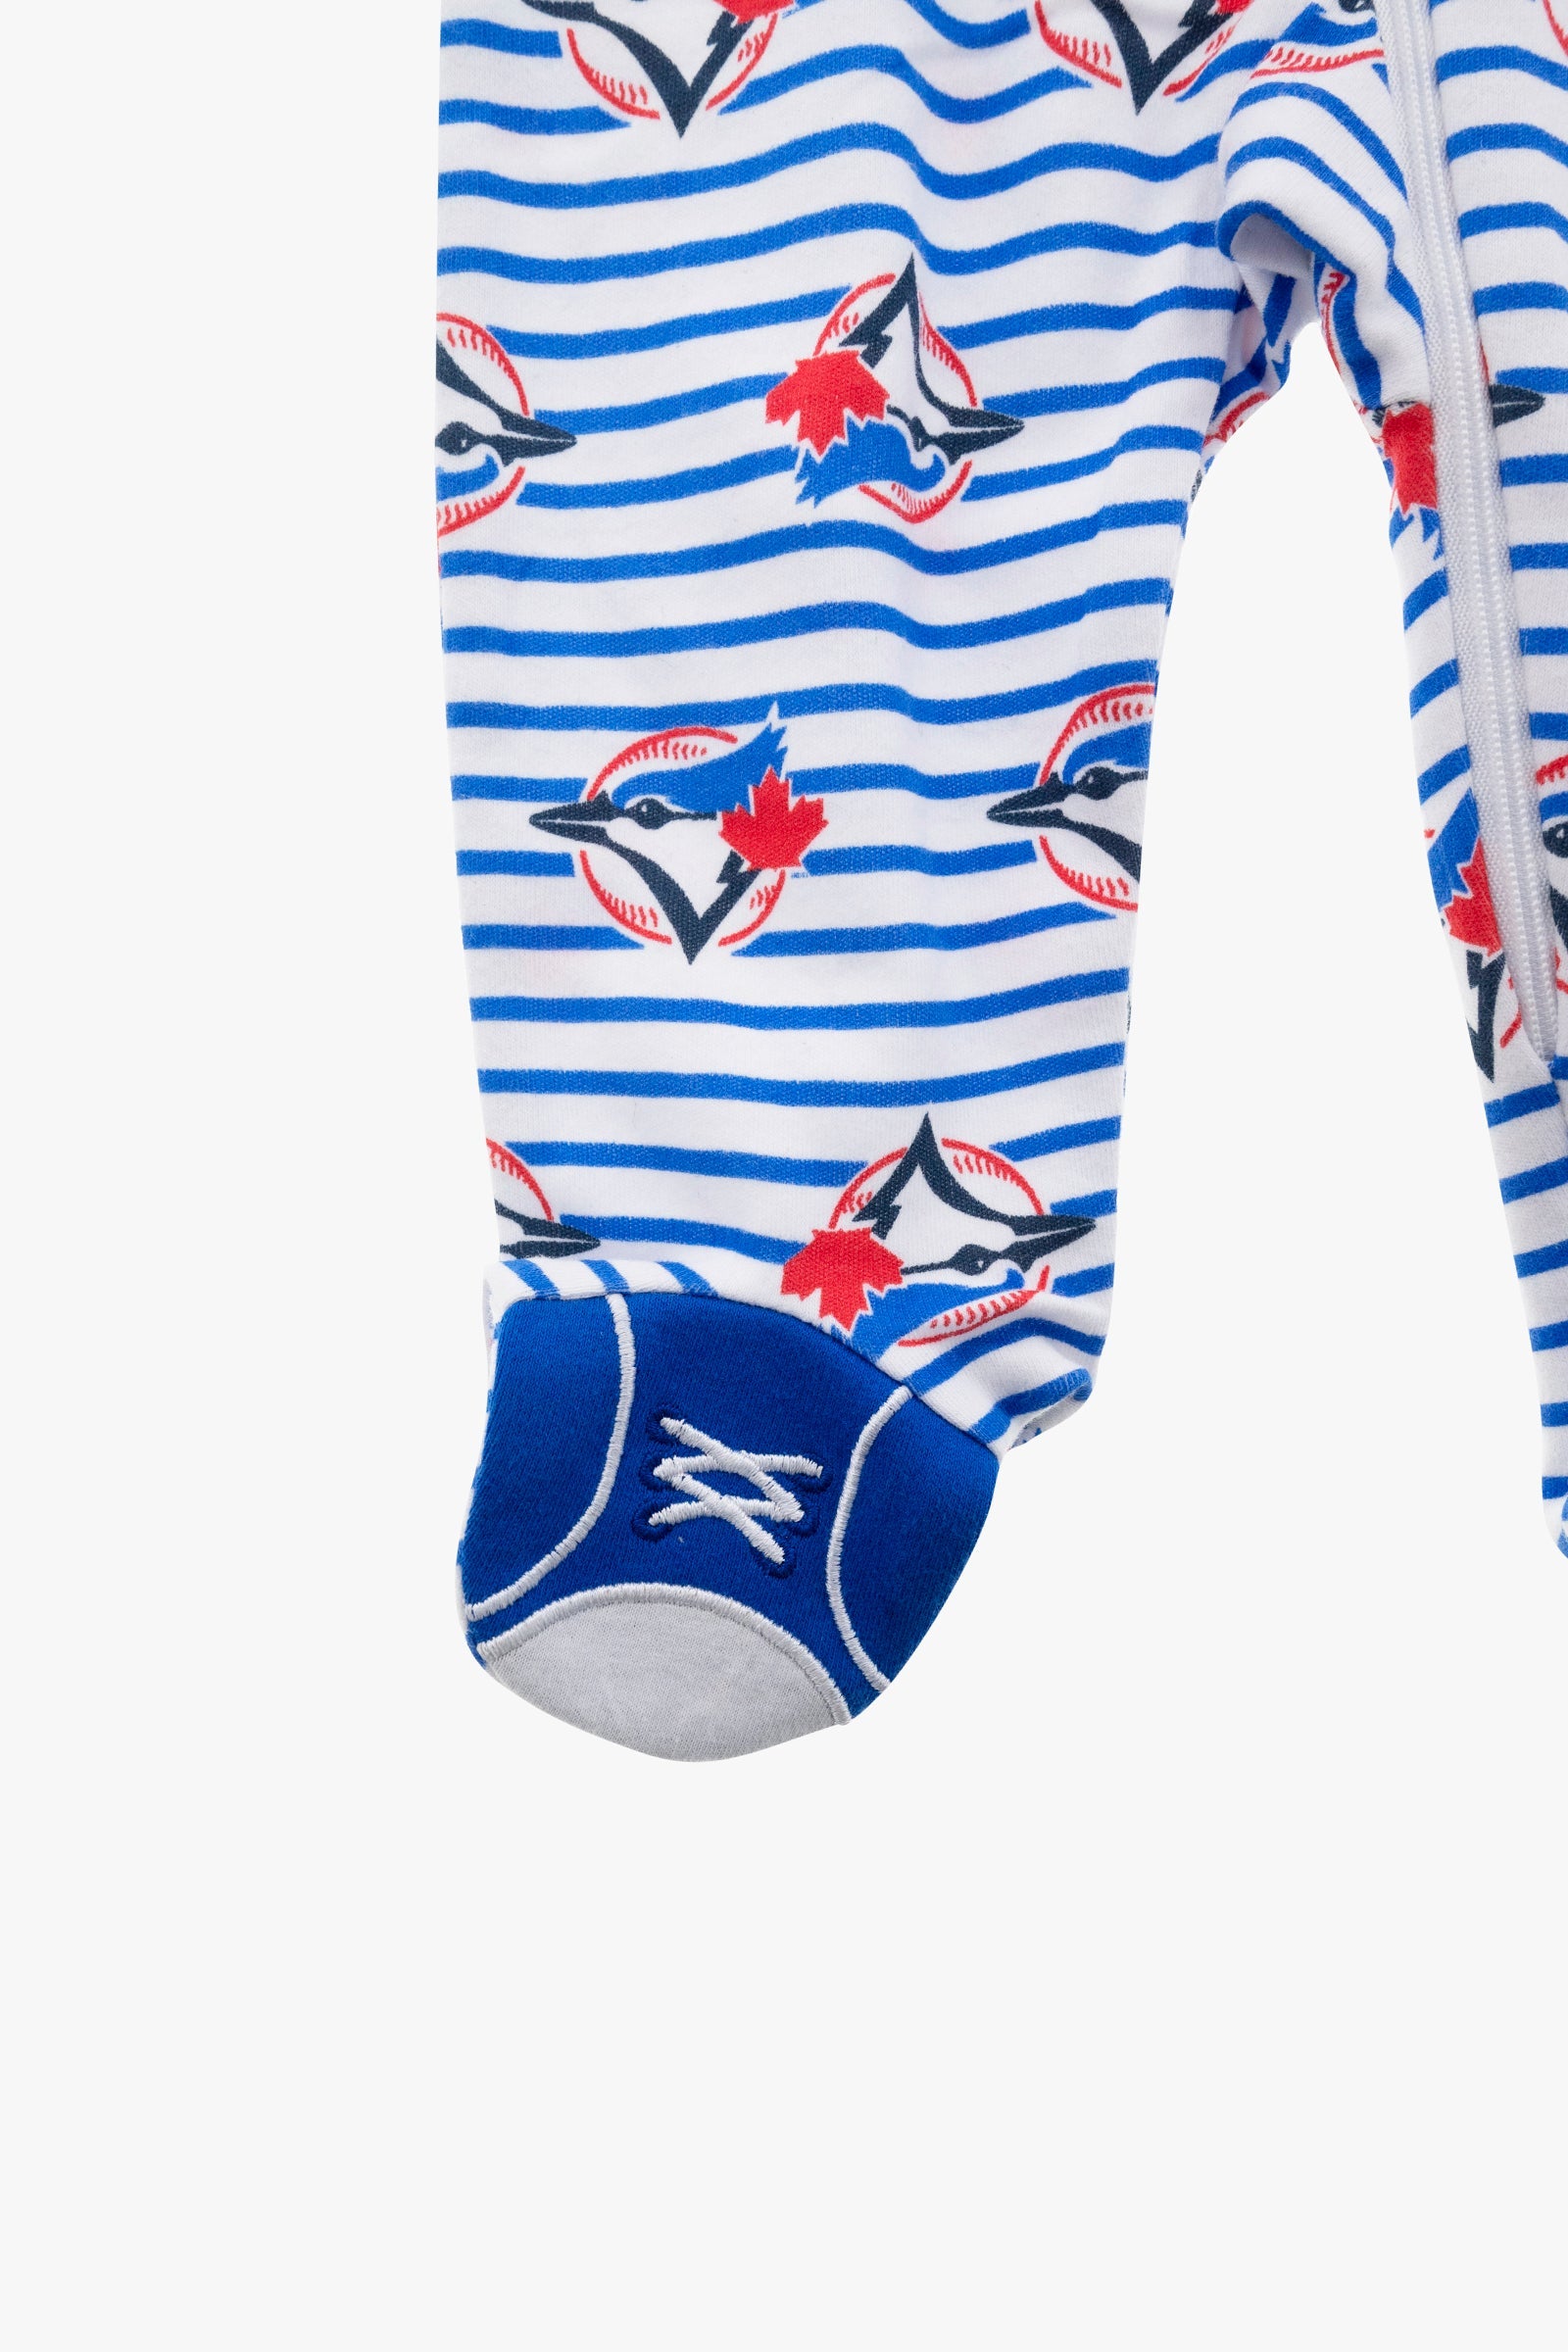 Gertex MLB Toronto Blue Jays Pattern ToddlerSleeper with Zipper 